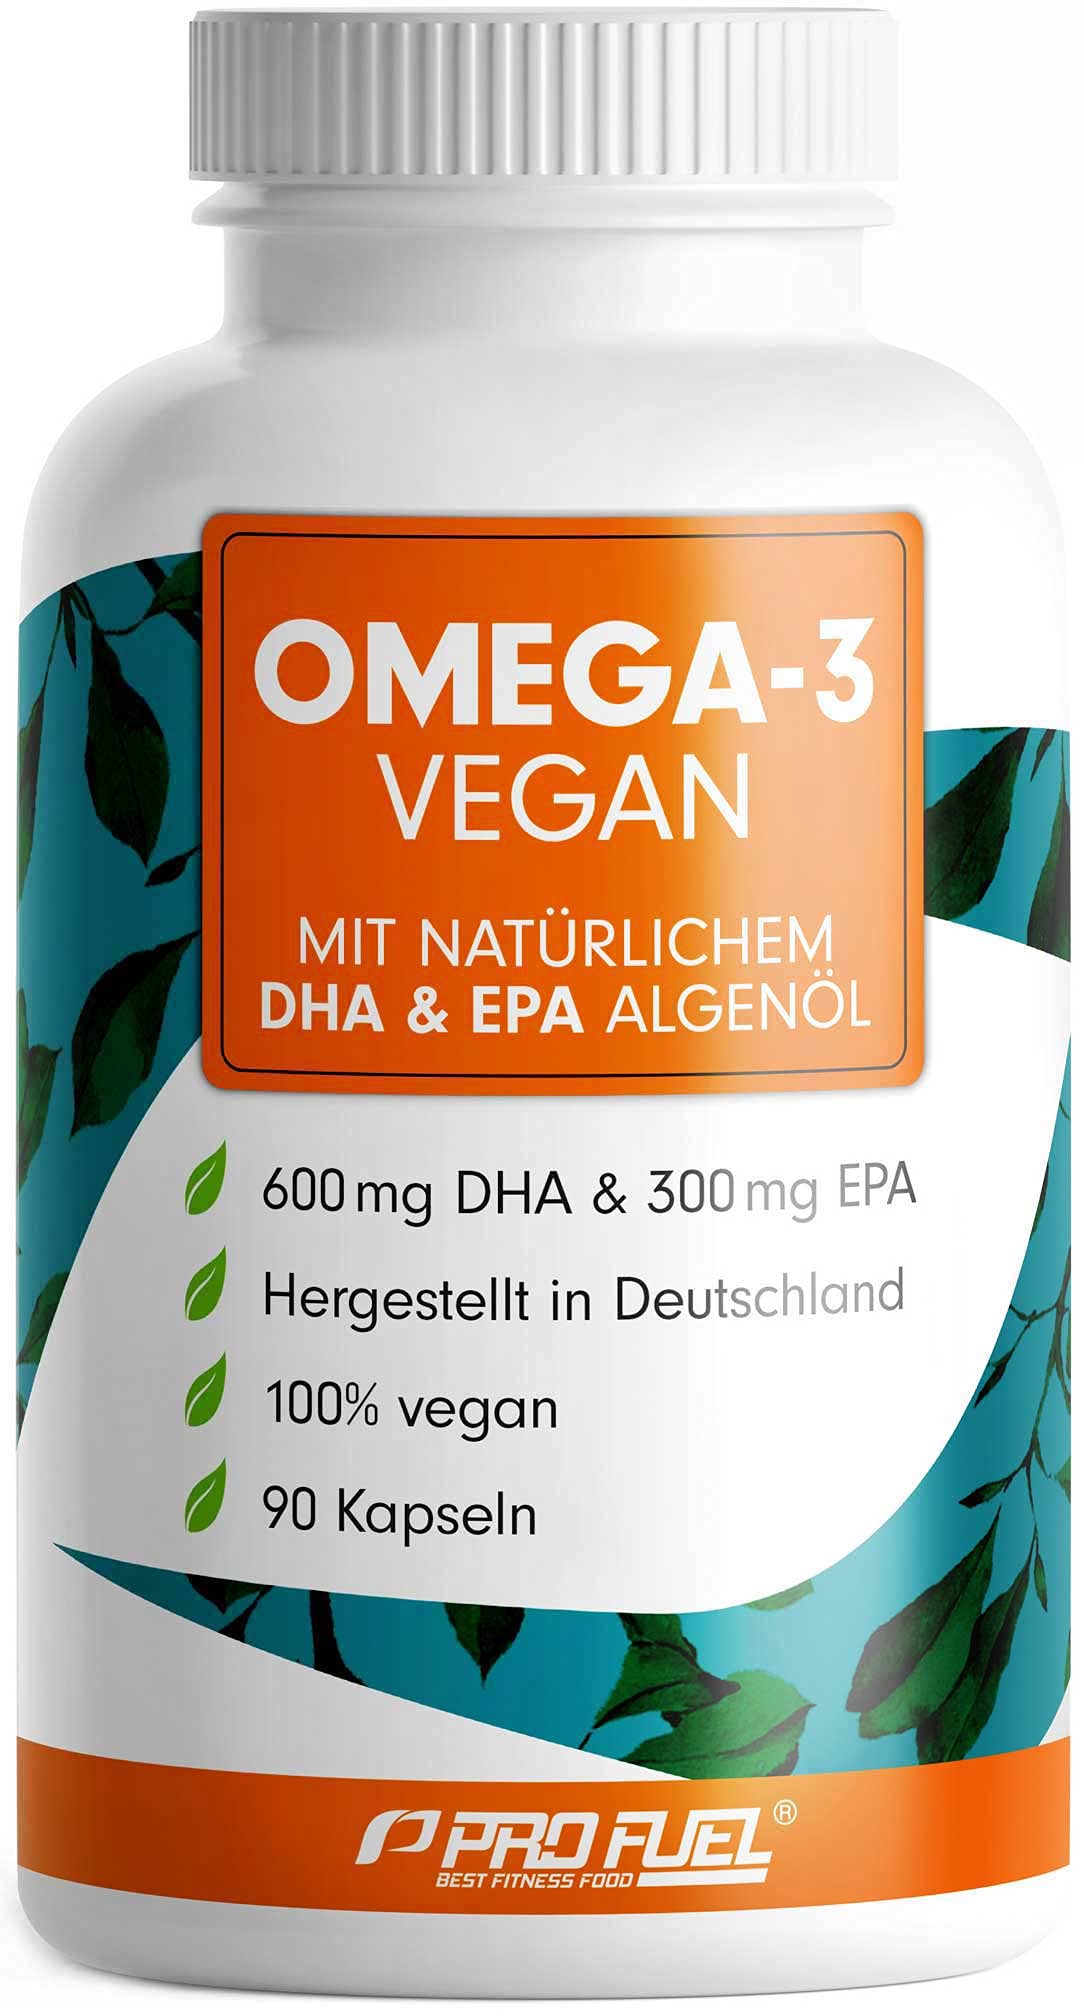 Omega-3 vegan Kapseln 90x - 2000 mg Algenöl pro Tag - hochdosiert mit 600 mg DHA + 300 mg EPA - hochwertige Omega-3 Algenöl Kapseln vegan - DHA:EPA Verhältnis 2:1 - laborgeprüft mit Analyse-Zertifikat